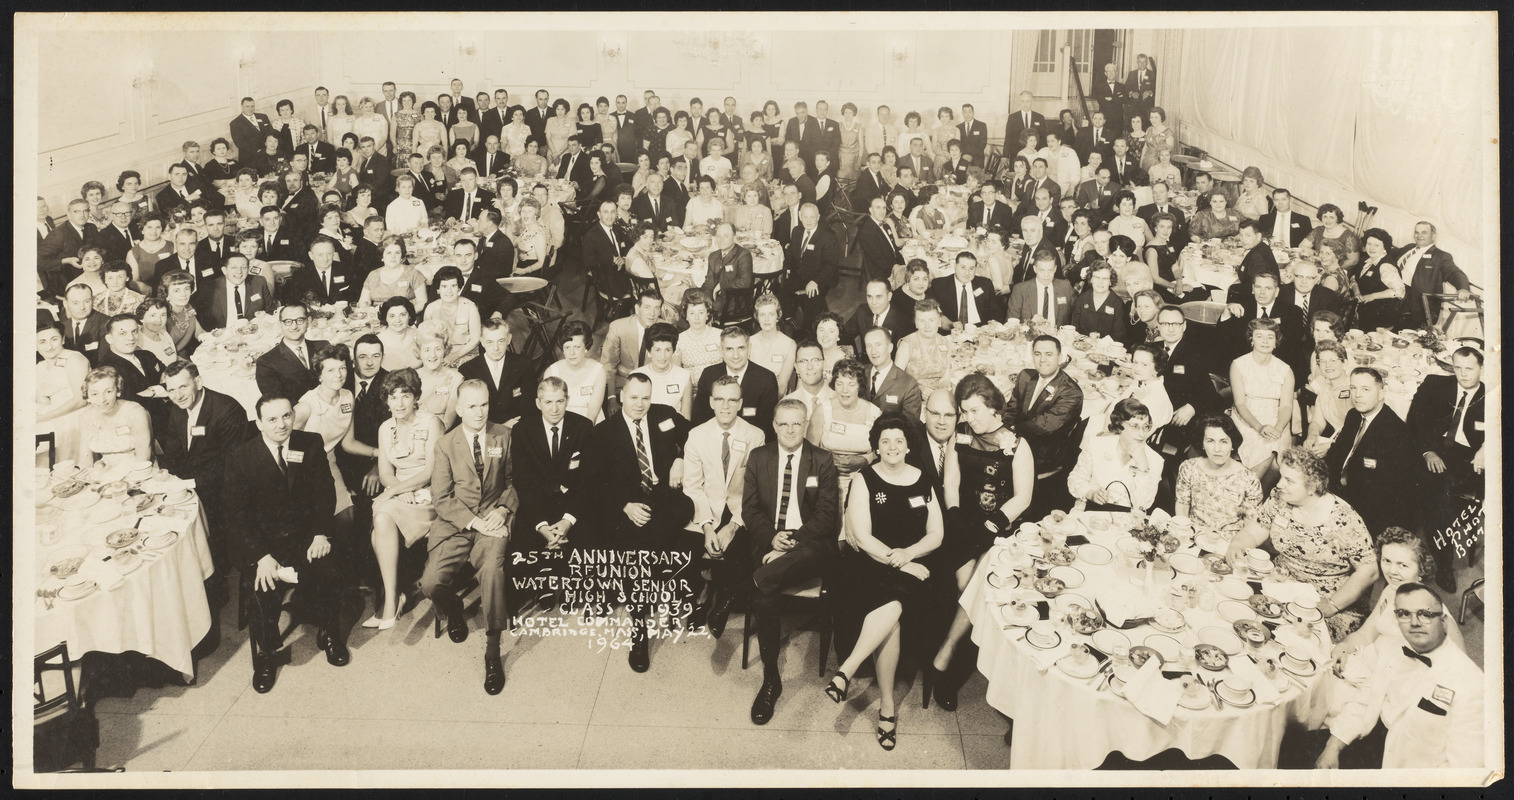 25th anniversary reunion - Watertown Senior High School Class of 1939